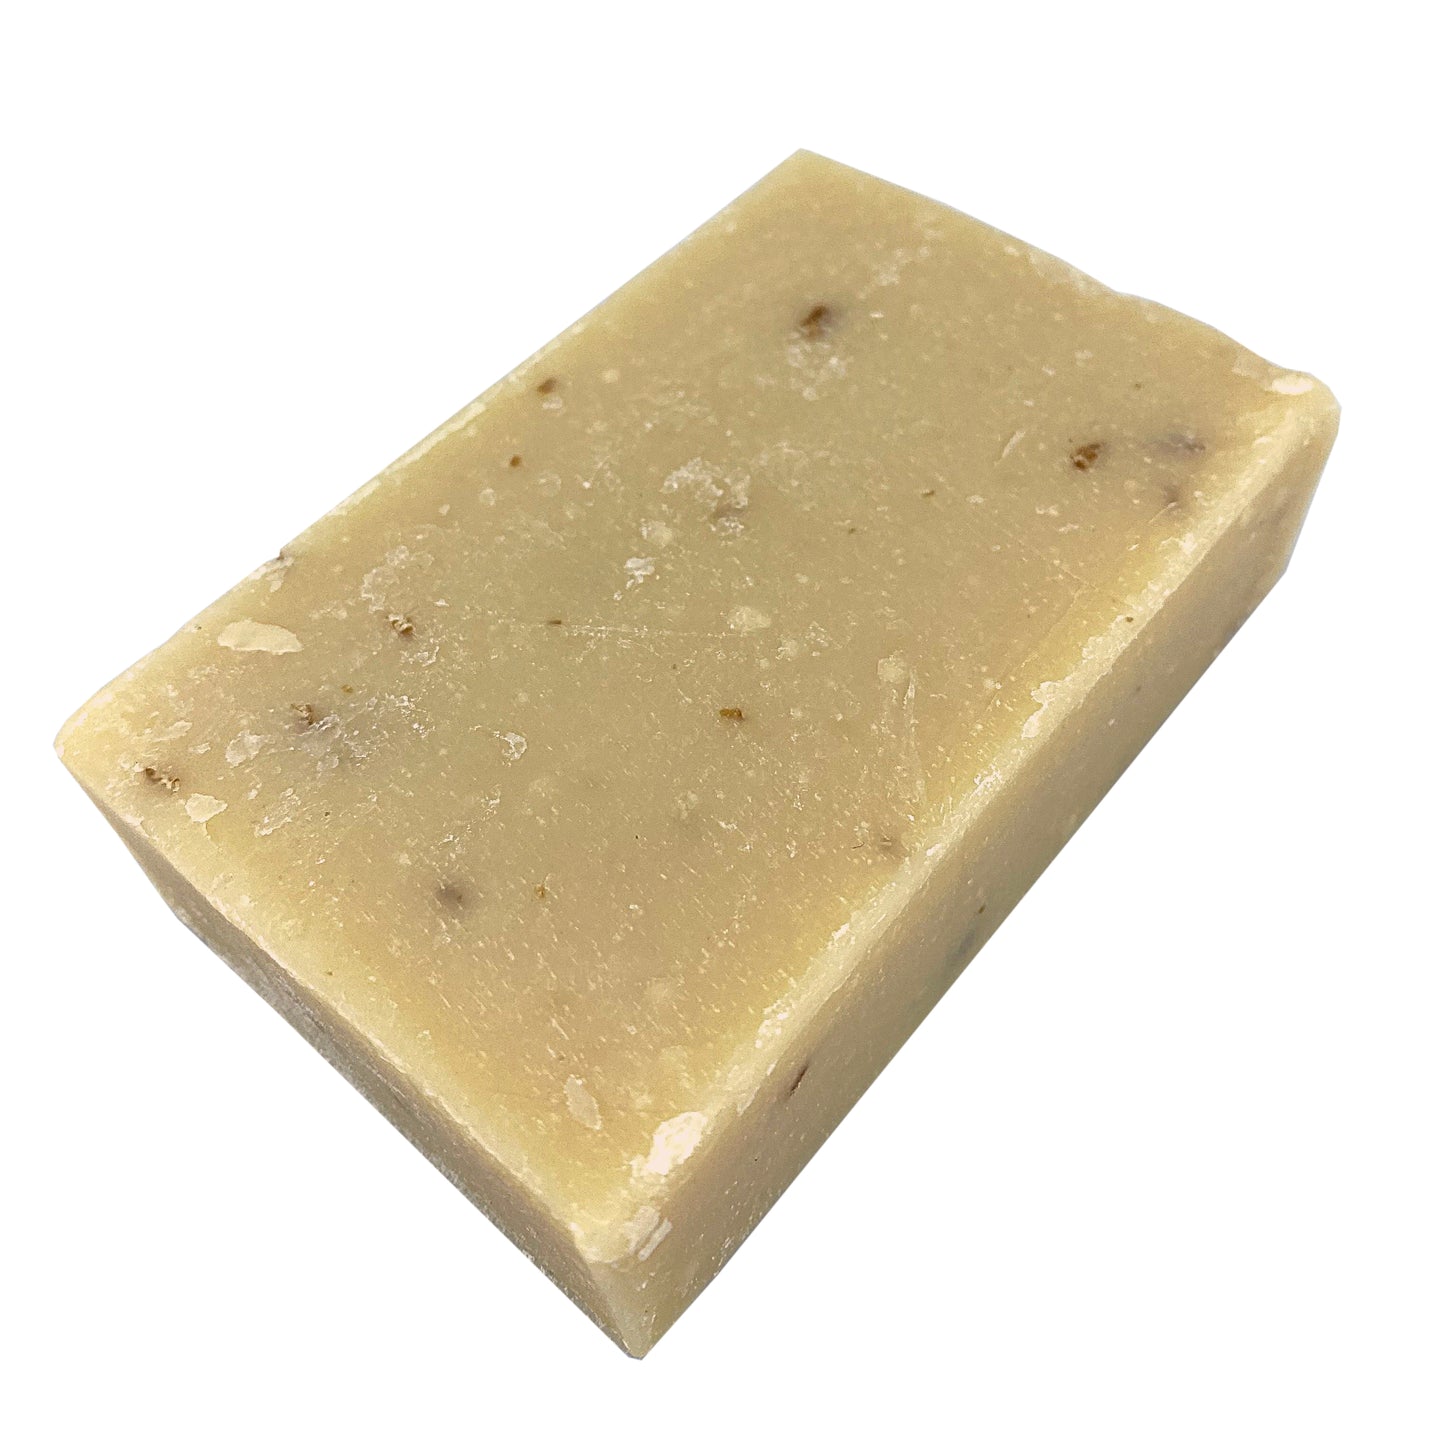 Yeren's Cherry Almond | Cold Process Soap